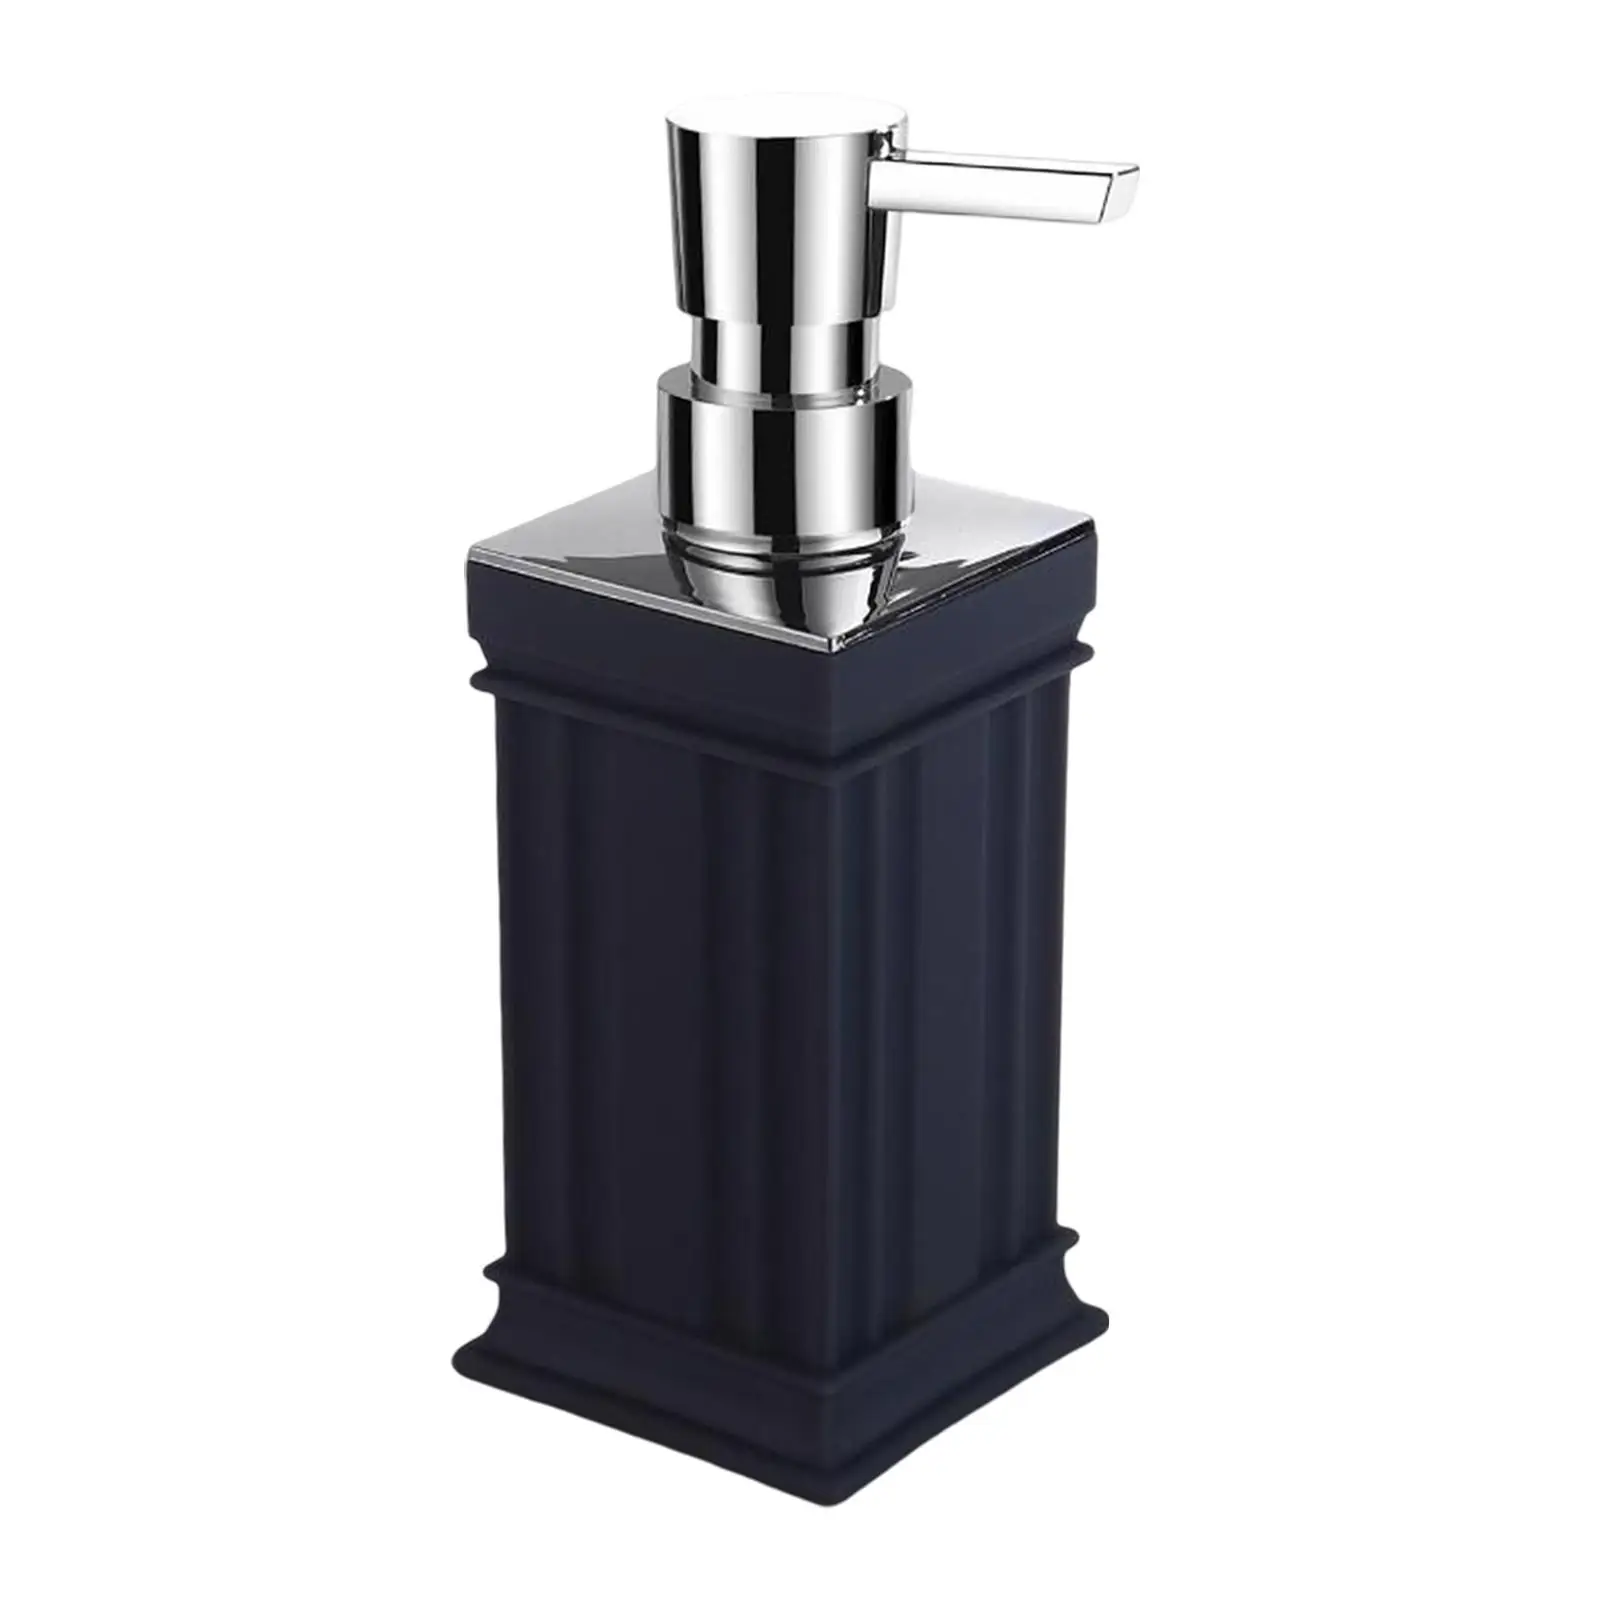 Empty Lotion Soap Dispenser Pump Lotion/Shampoo Bottle for Shampoo Moisturizer Body Wash